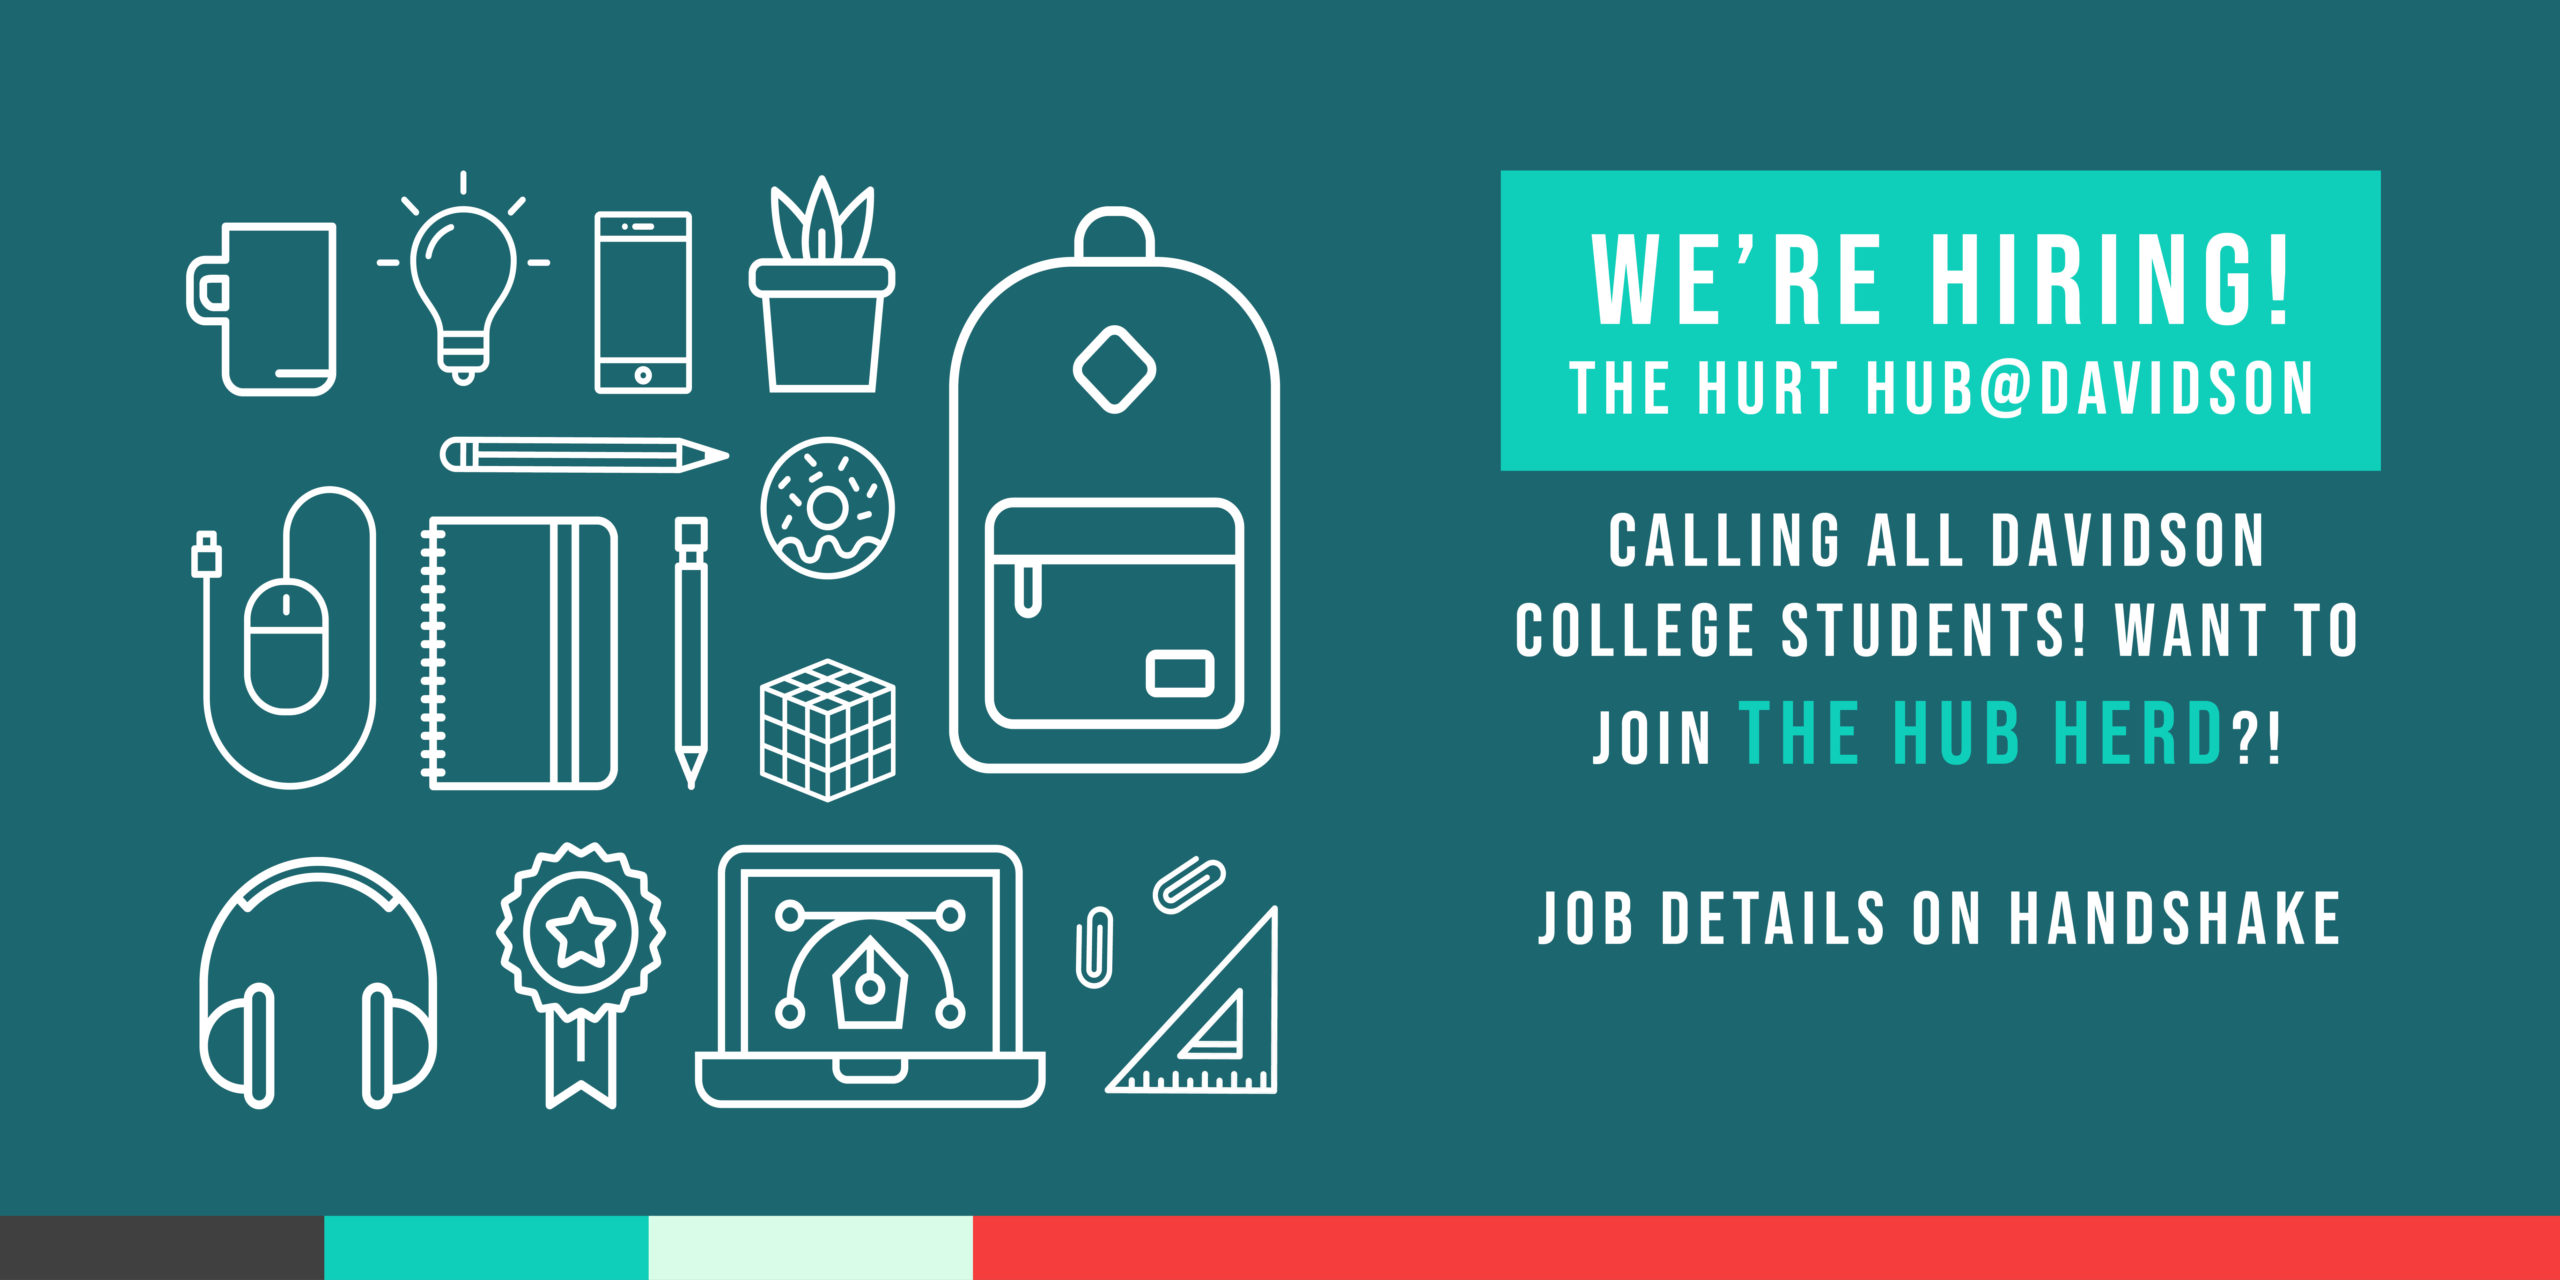 We’re hiring Davidson College Students at The Hurt Hub@Davidson!